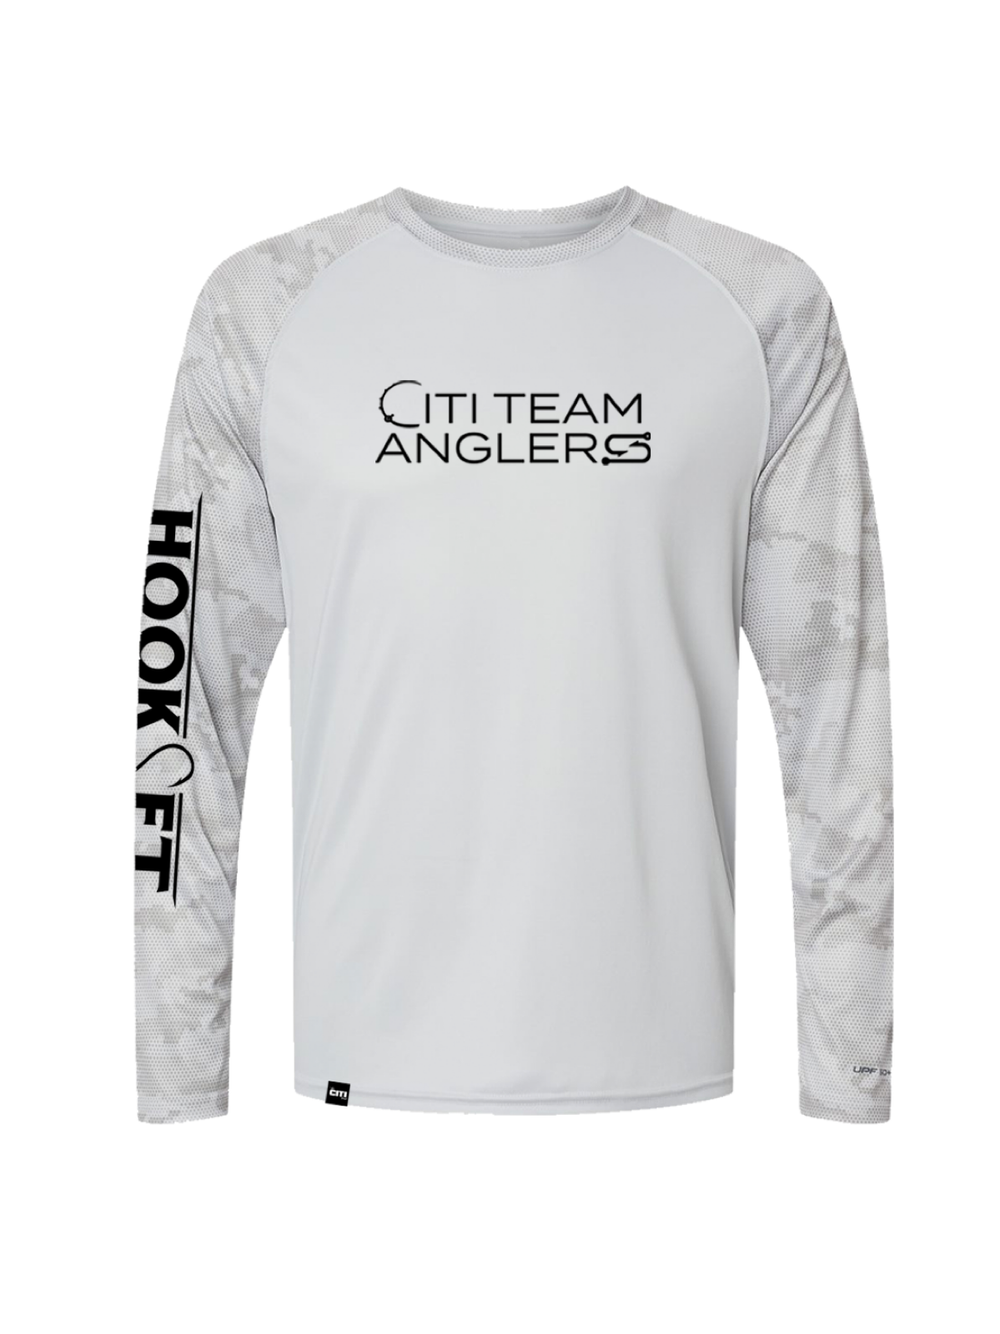 Citi Team Anglers Performance LongSleeve Aluminum Camo/Black — THE CITI TEAM